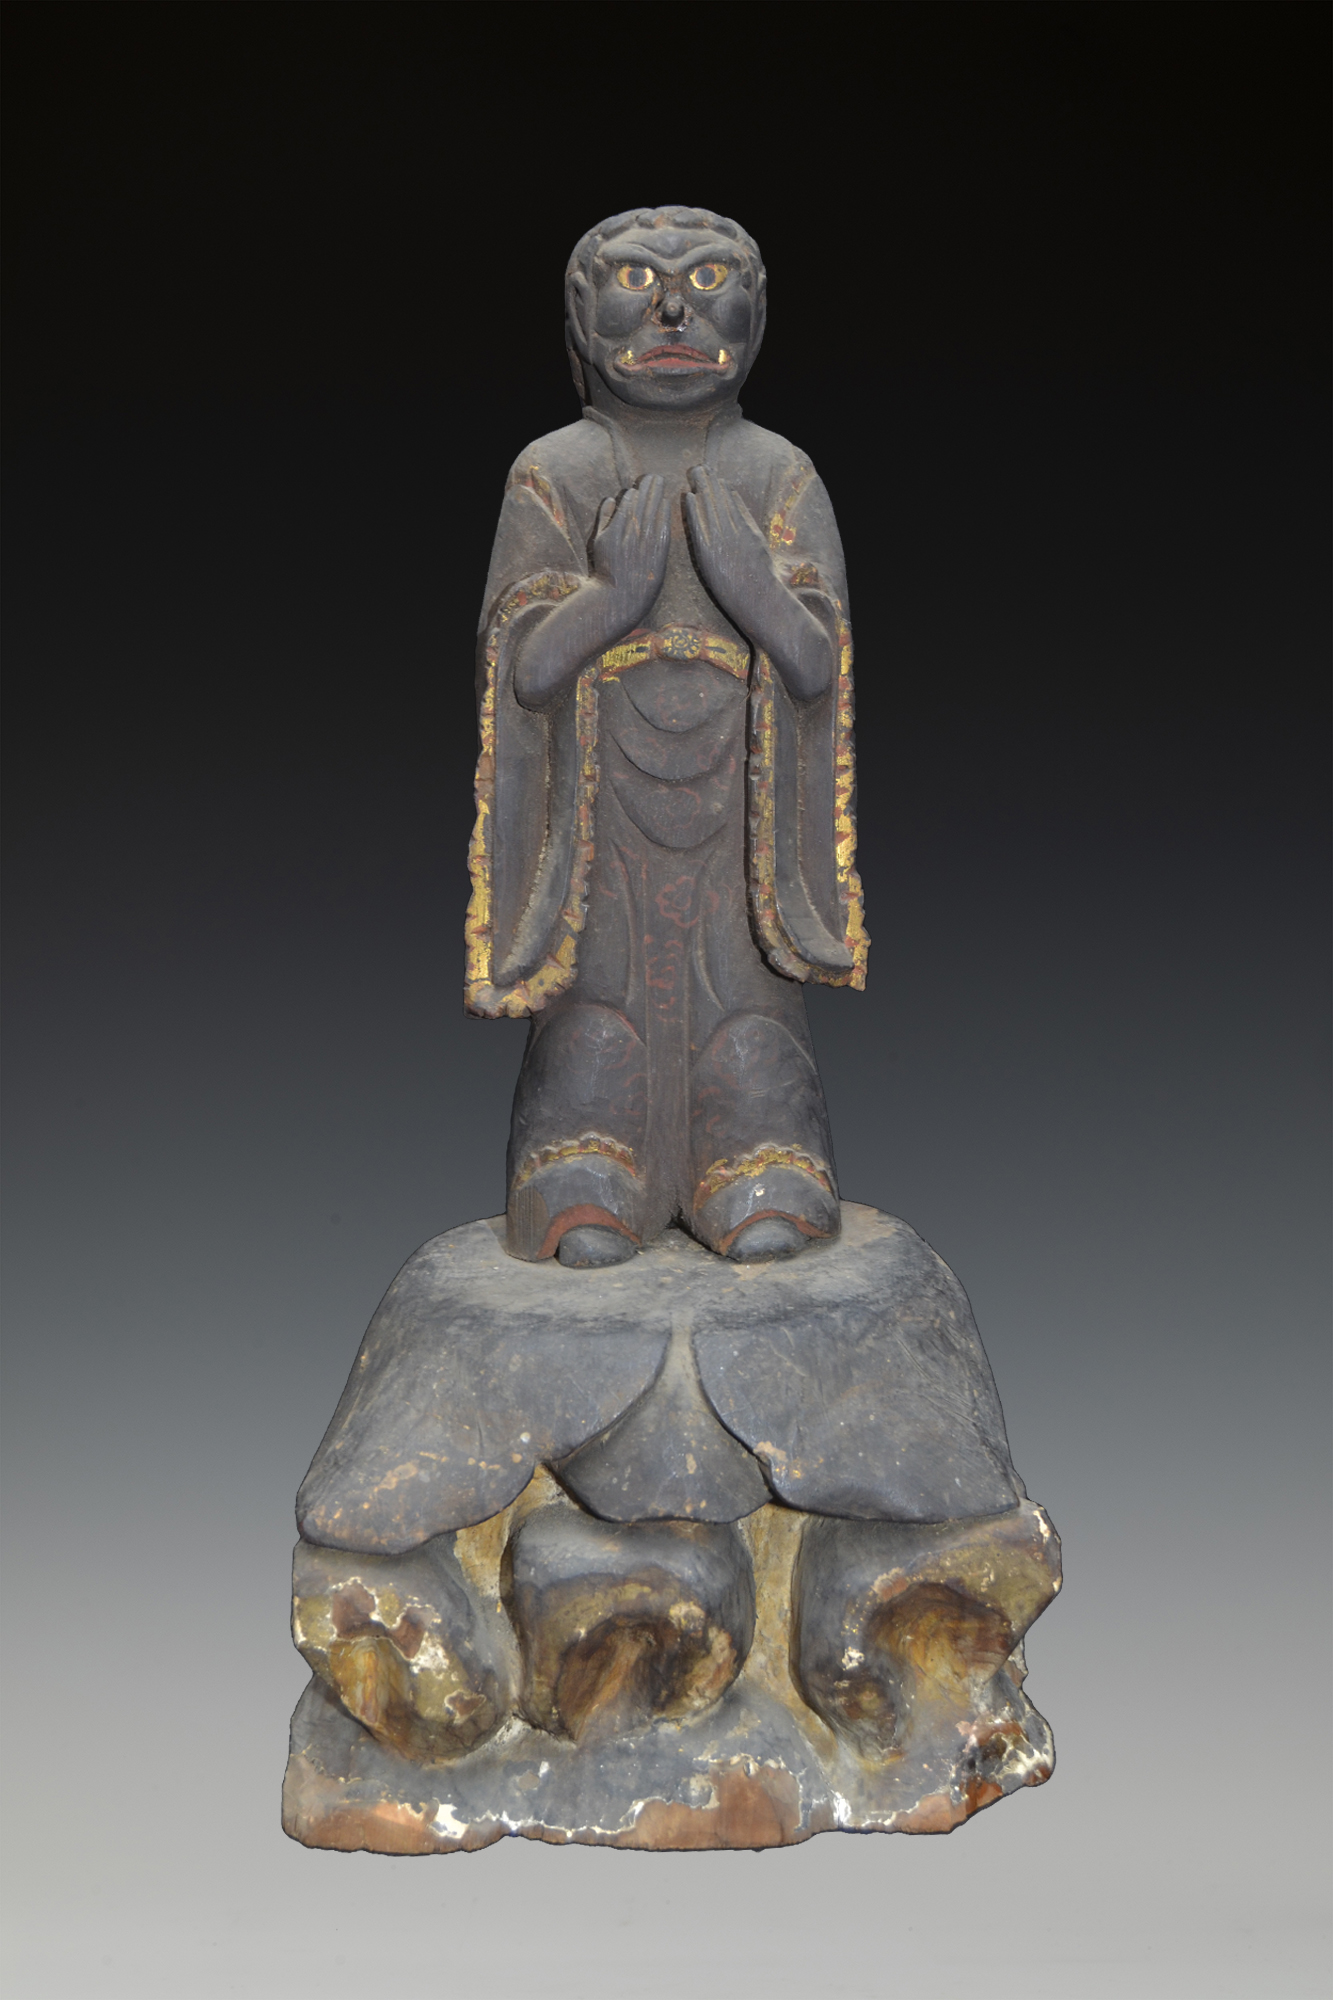 Antique Japanese Tengu Figure from the 18th Century